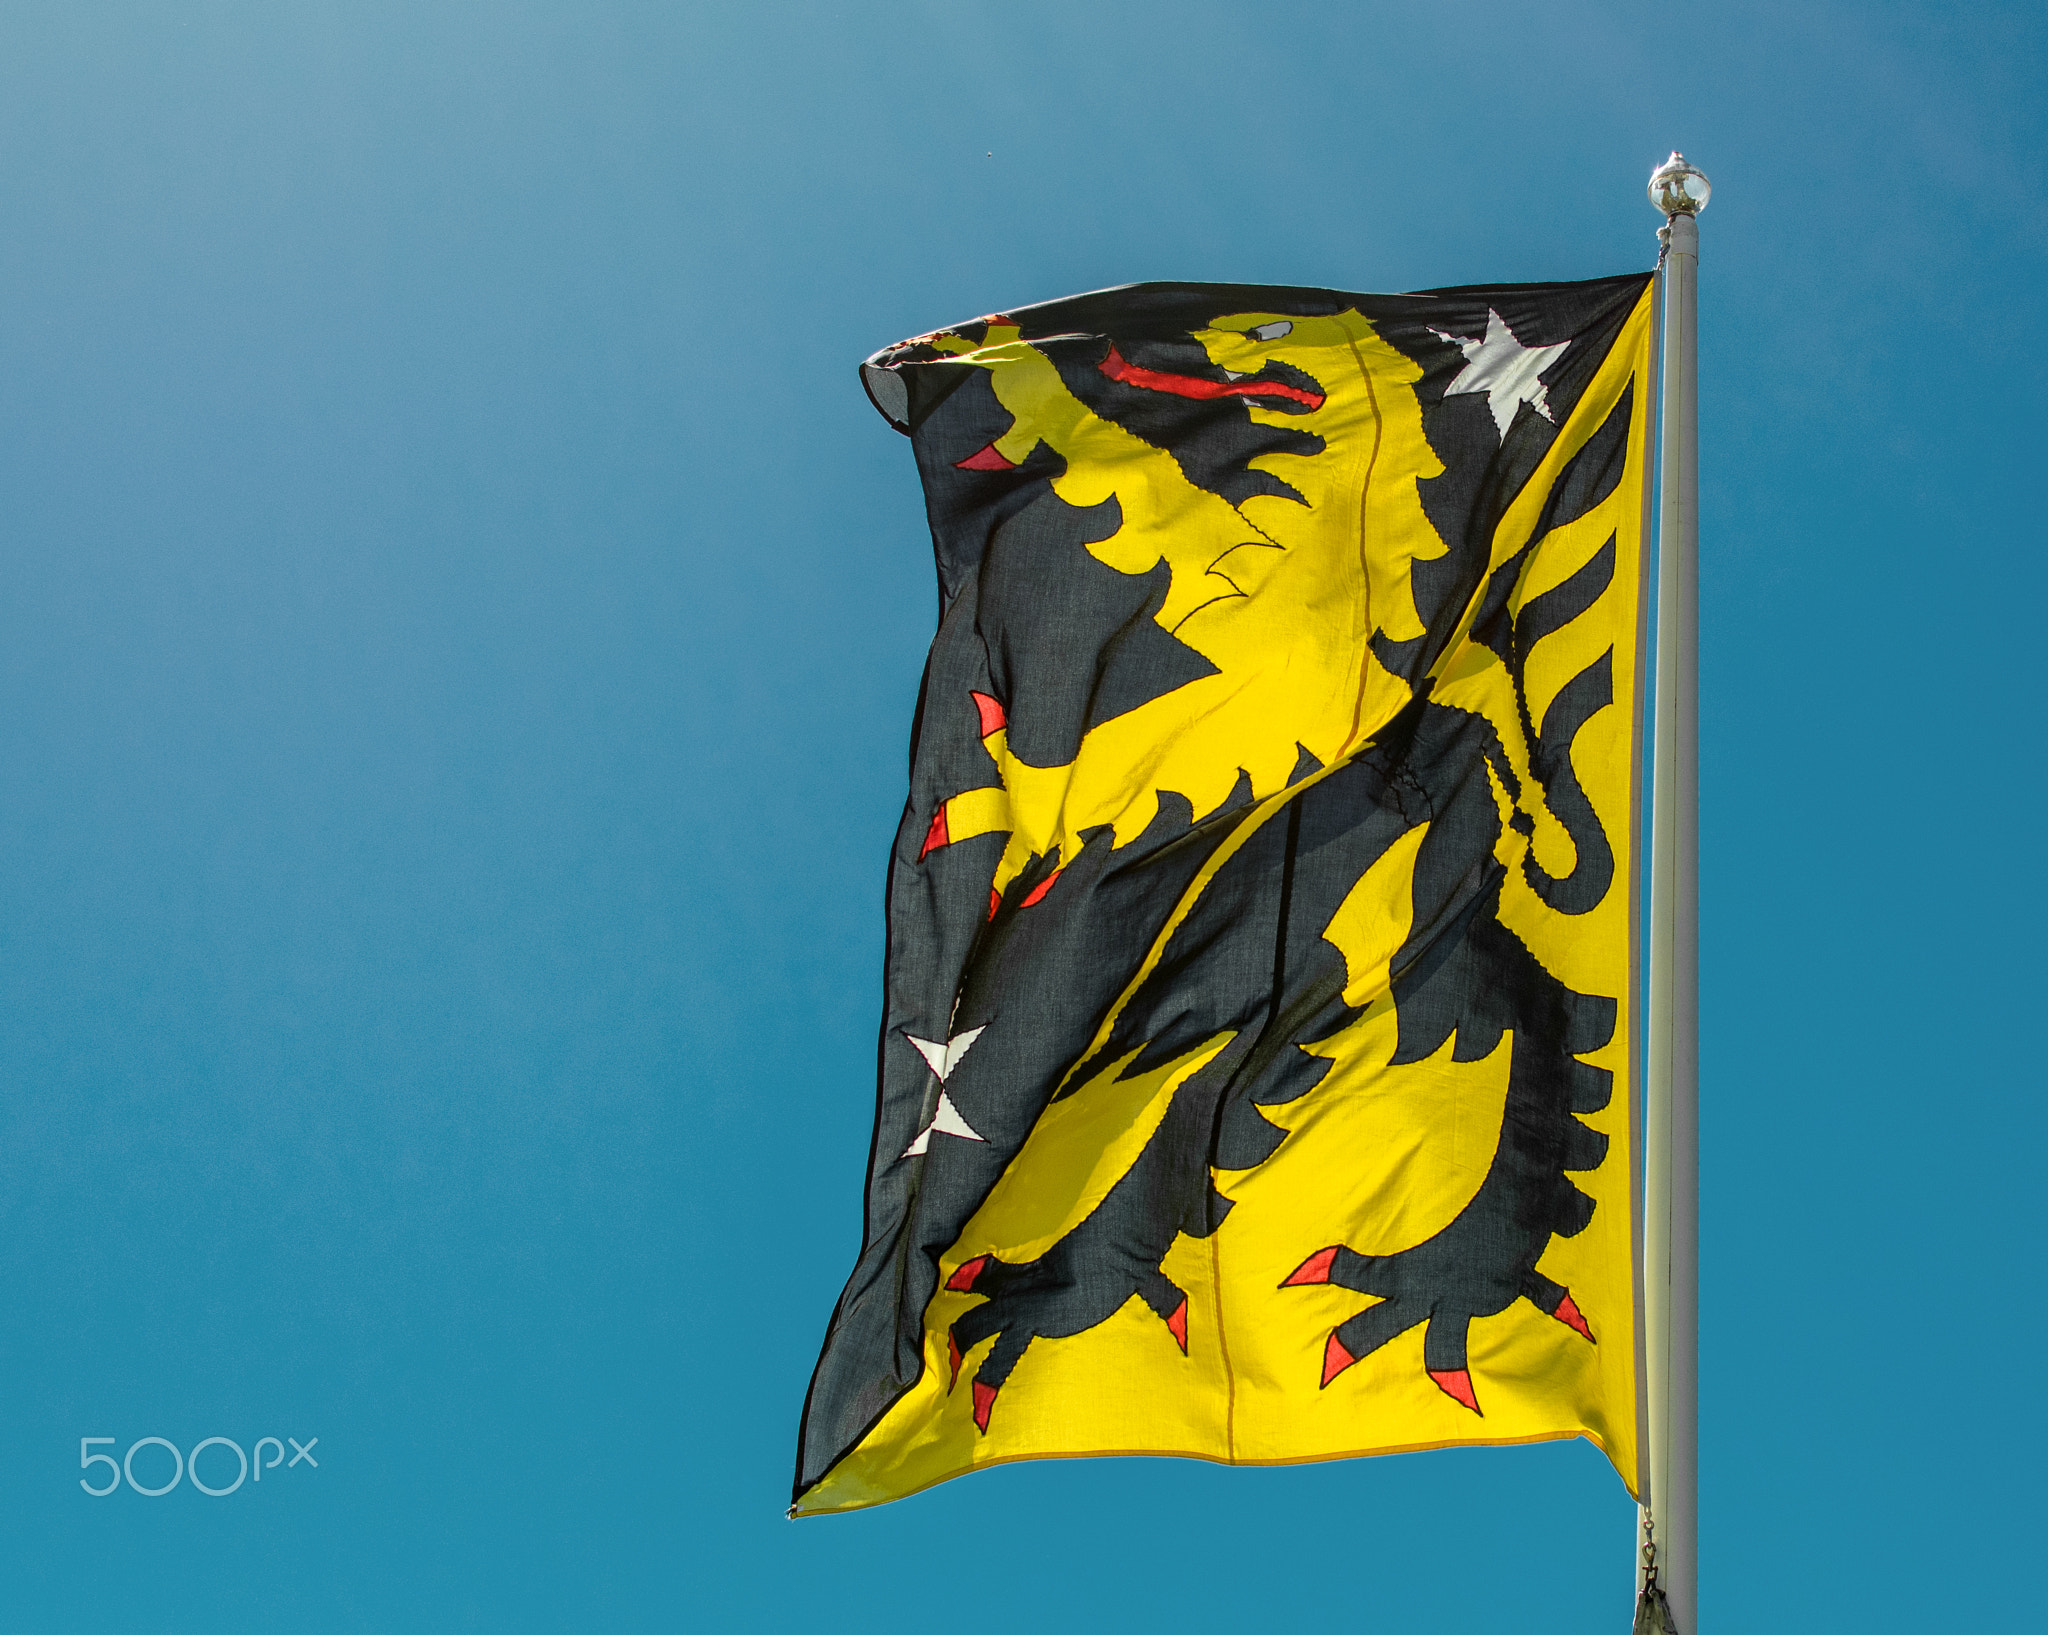 västra götaland flagga